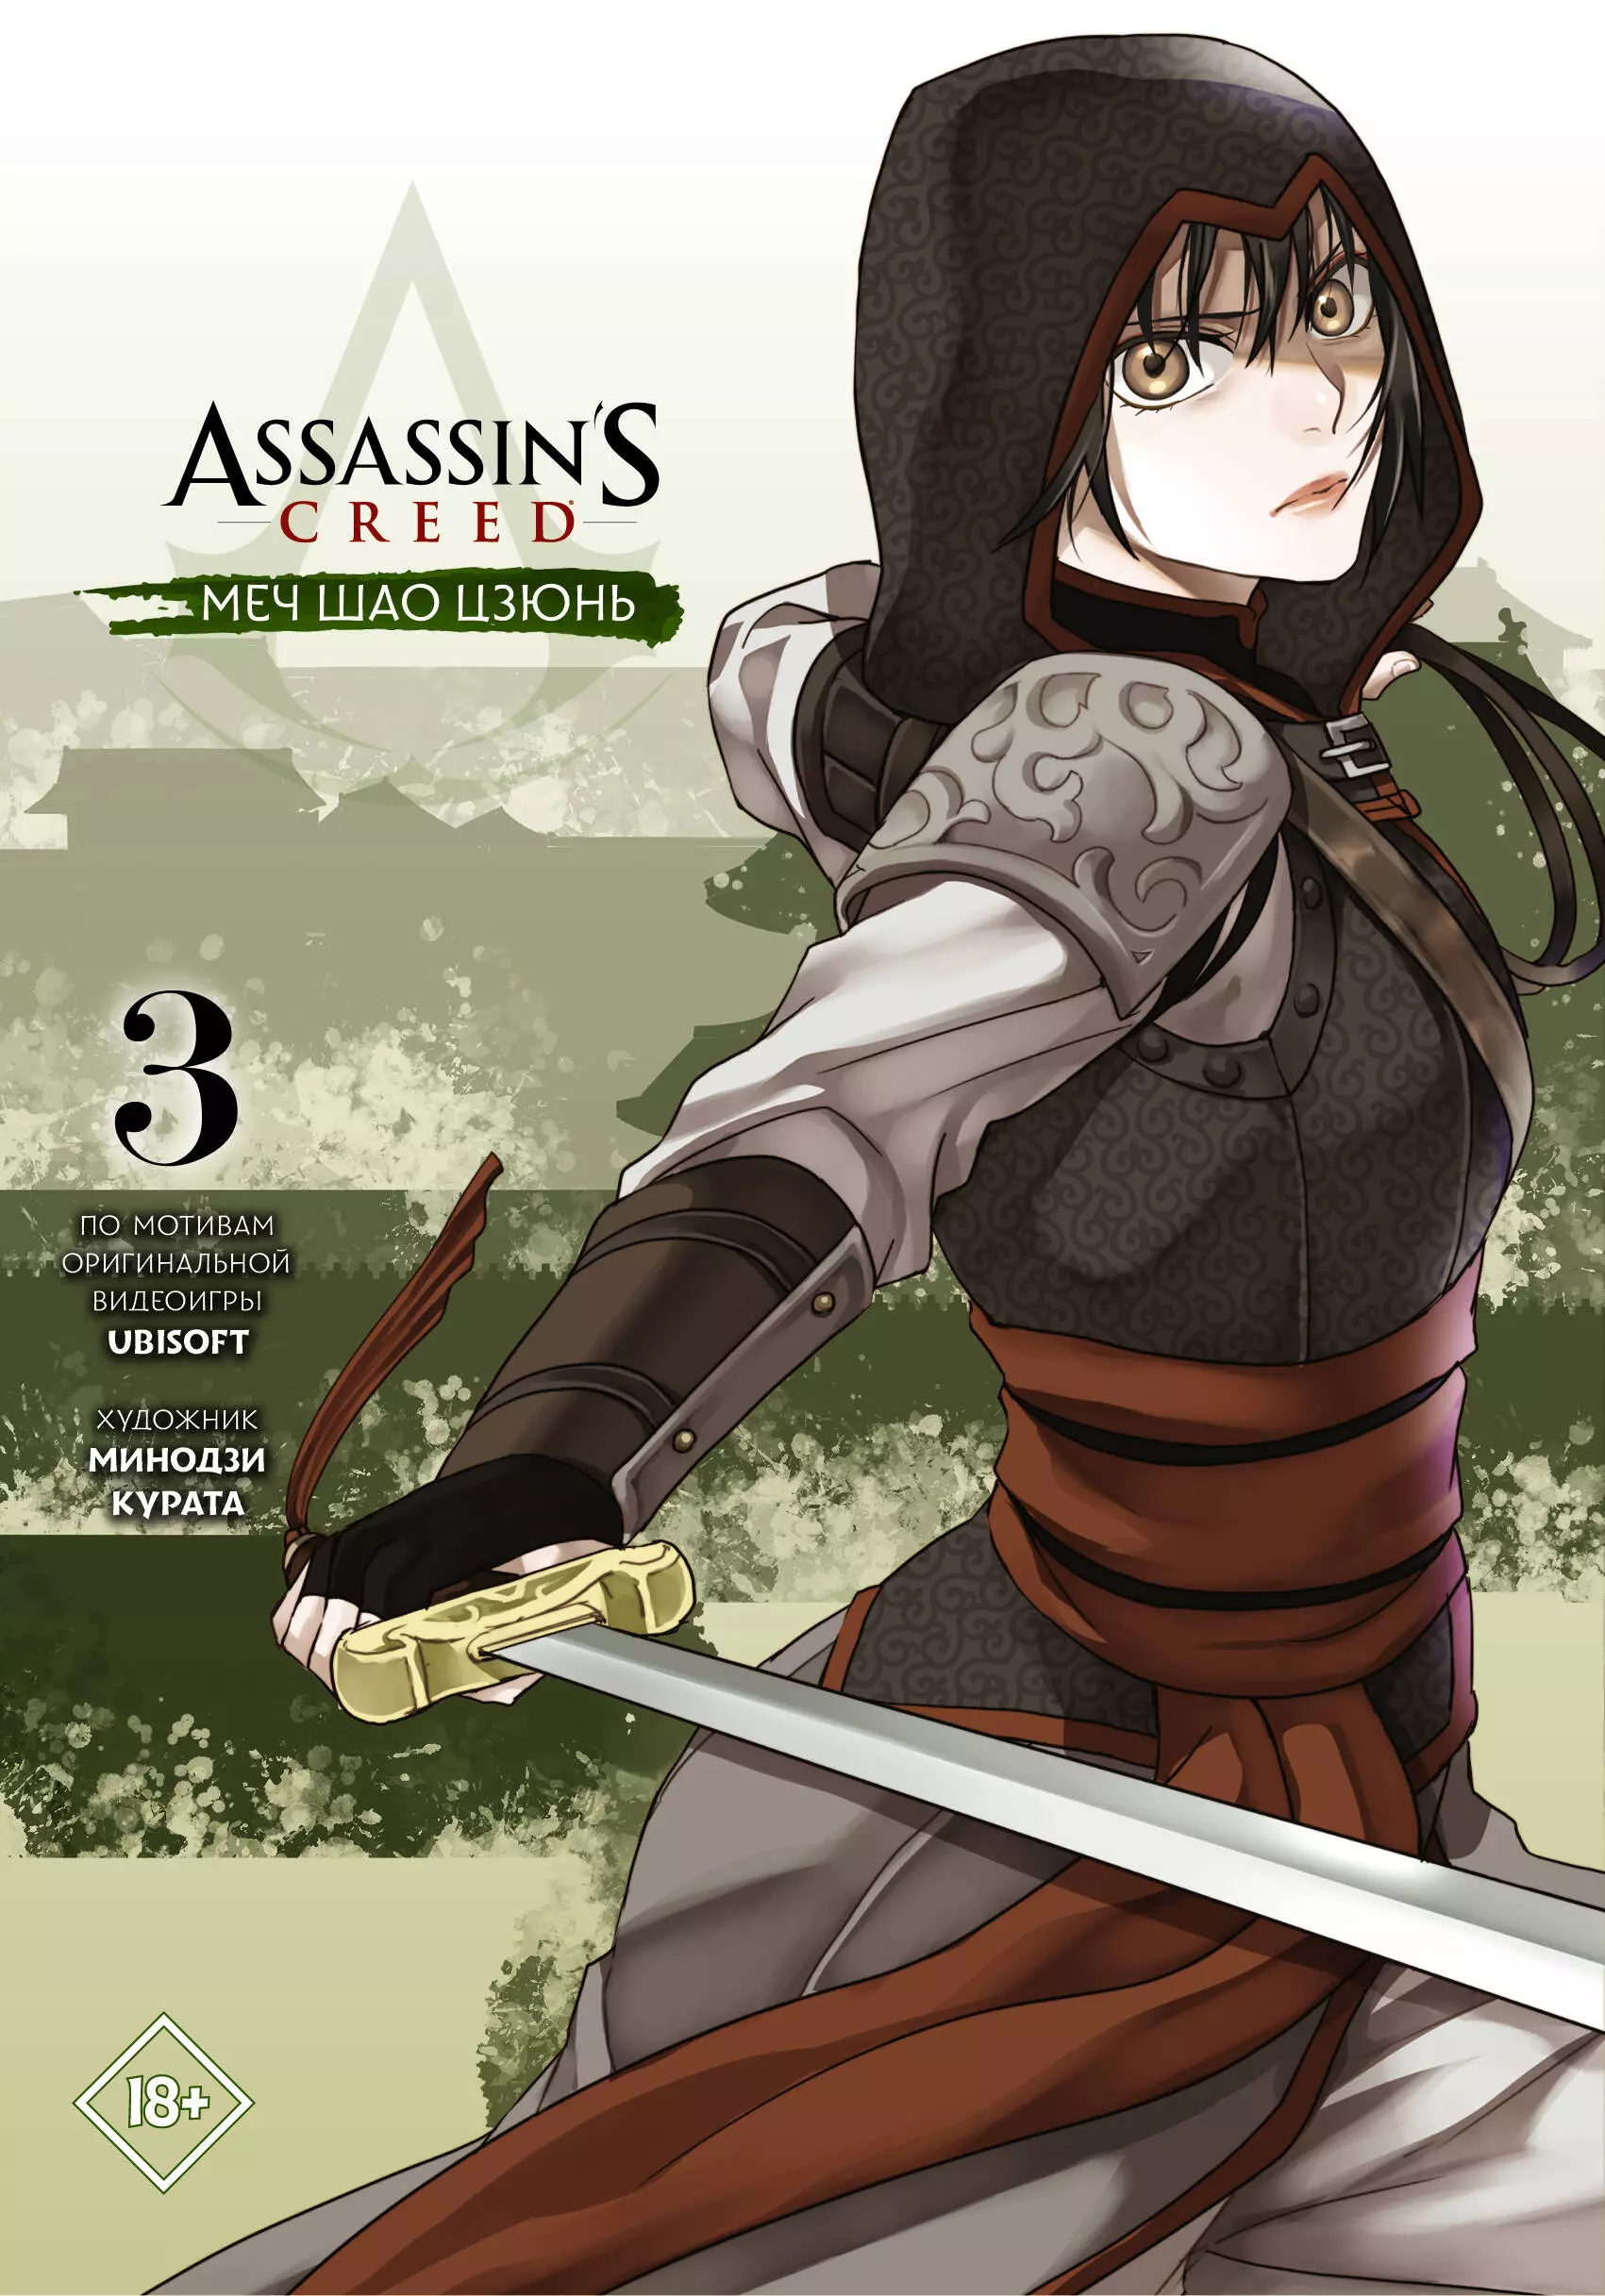 манга assassin s creed меч шао цзюнь книги 3–4 комплект книг Курата Минодзи Assassins Creed: Меч Шао Цзюнь. Том 3